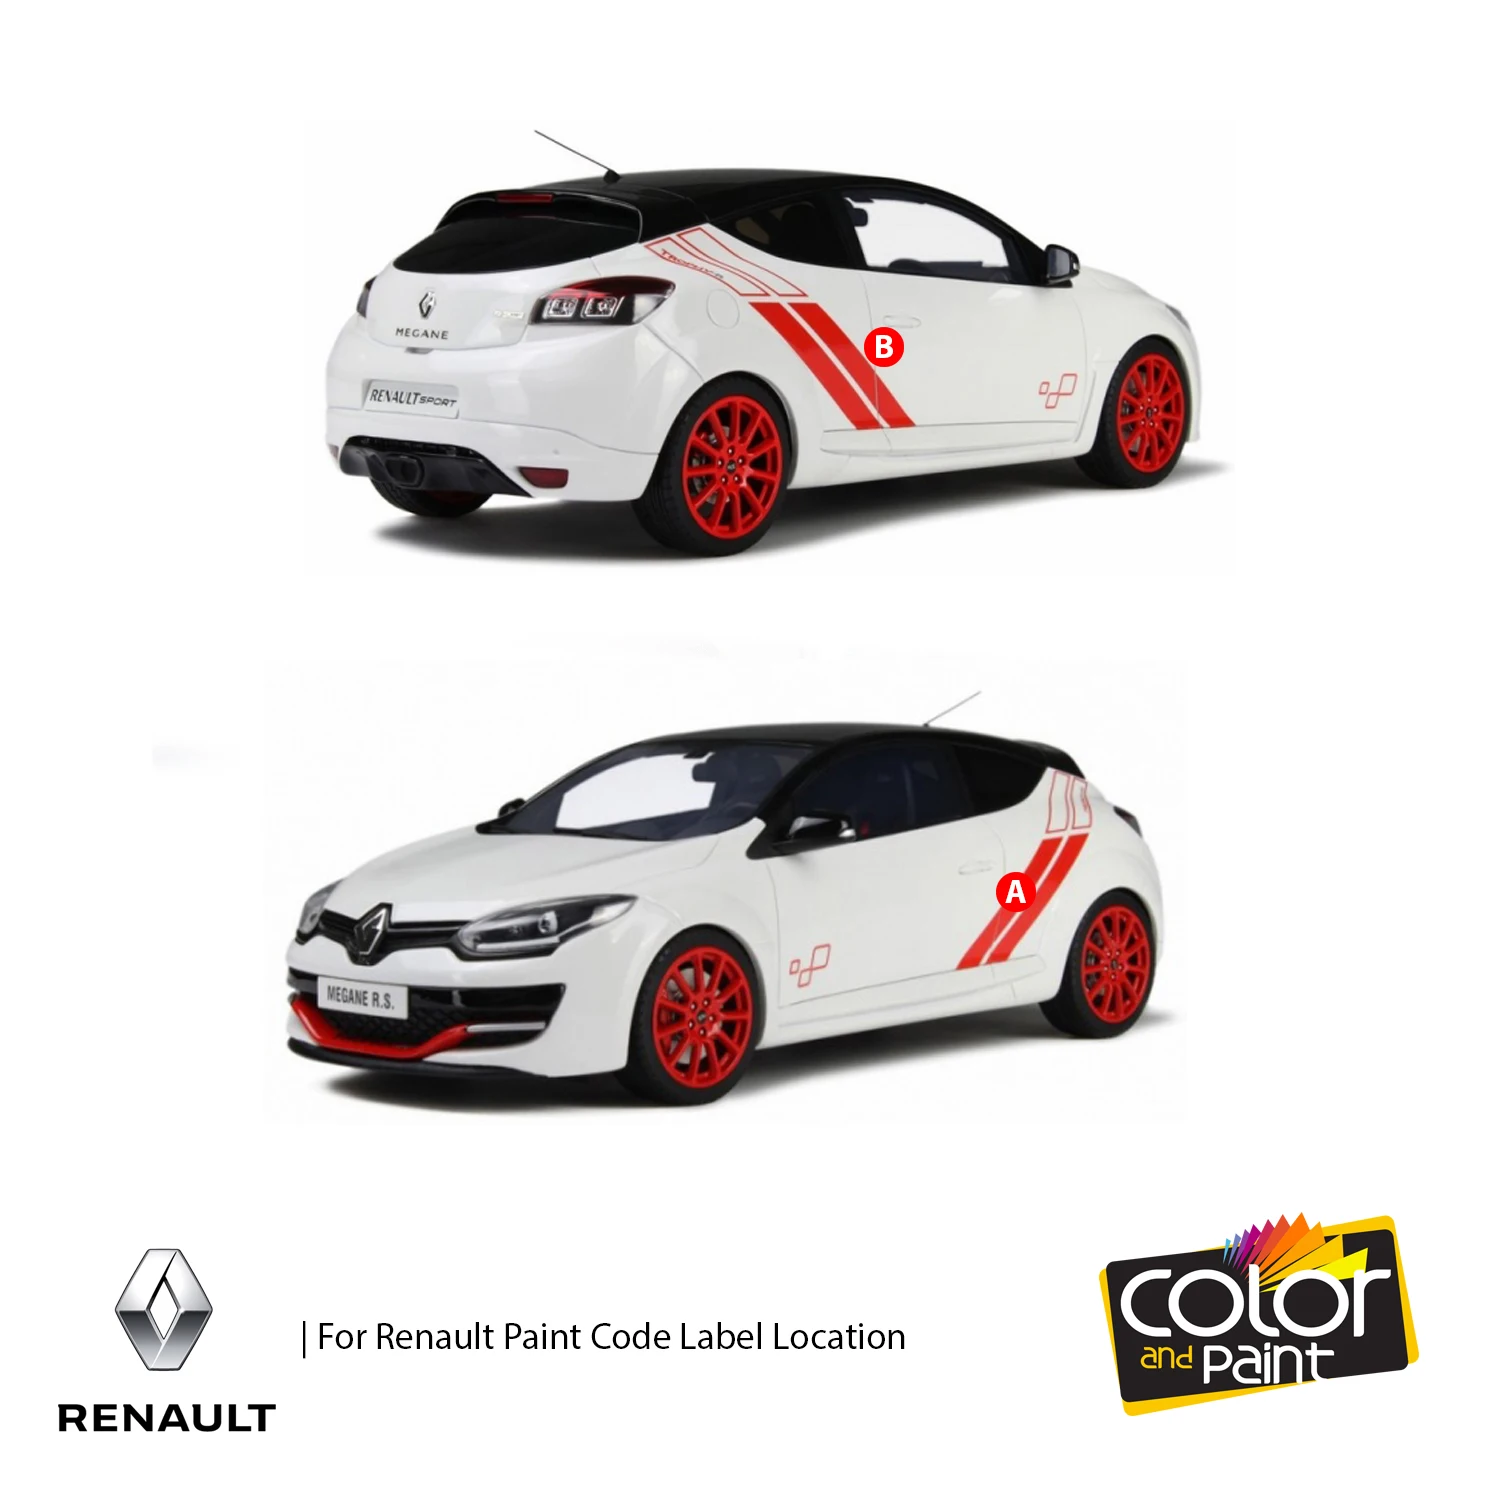 

Color and Paint for Renault Automotive Touch Up Paint - GRIS MERCURE NACRE MET - 564 - Paint Scratch Repair, exact Match